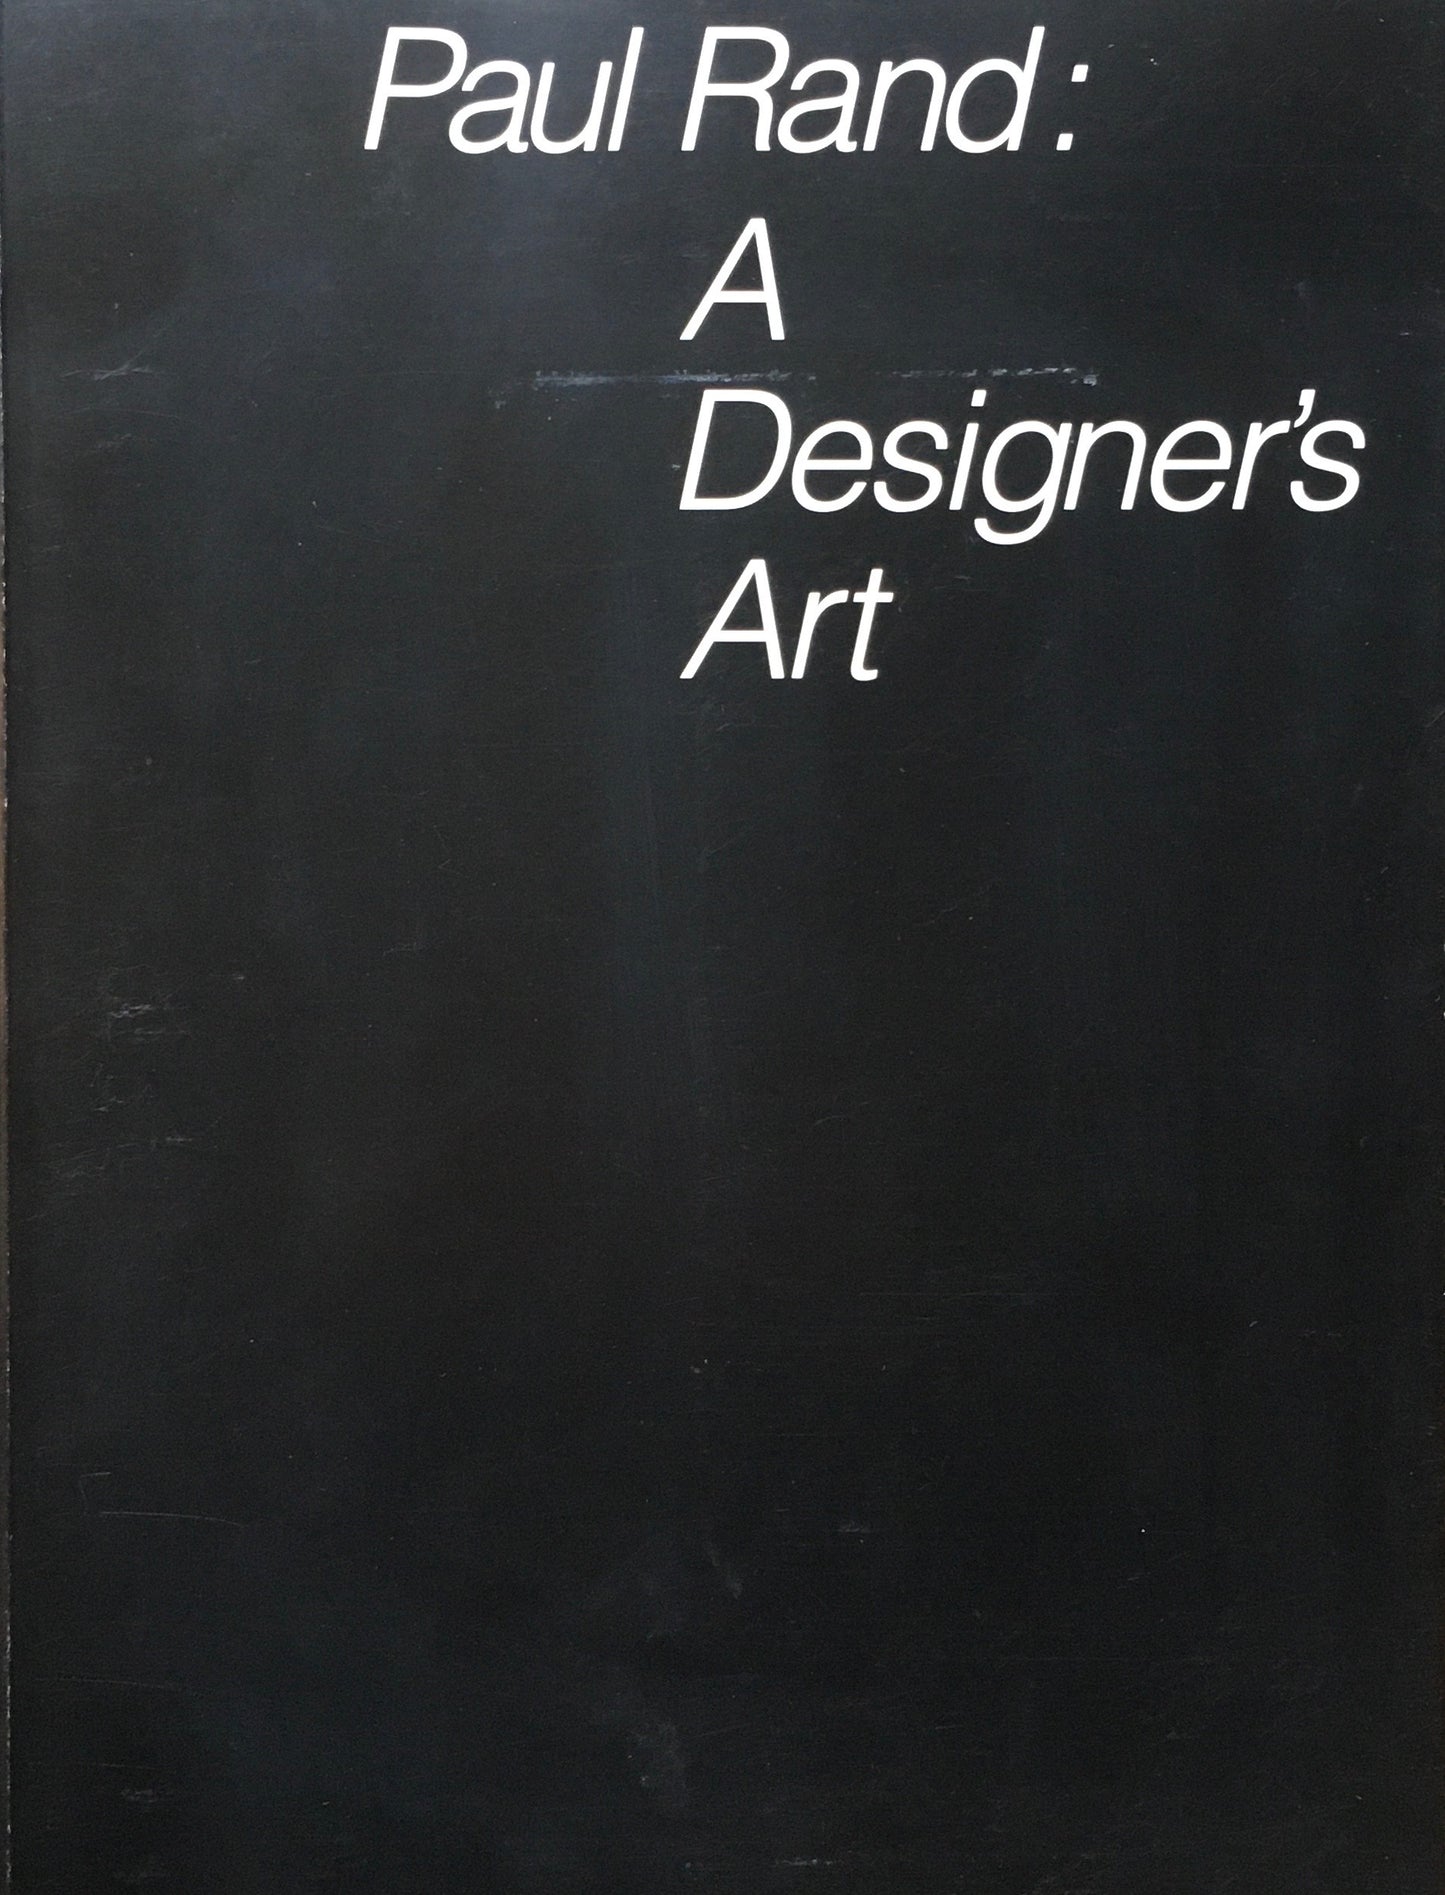 Paul Rand: A Designer’s Art 　Paul Rand　ポール・ランド